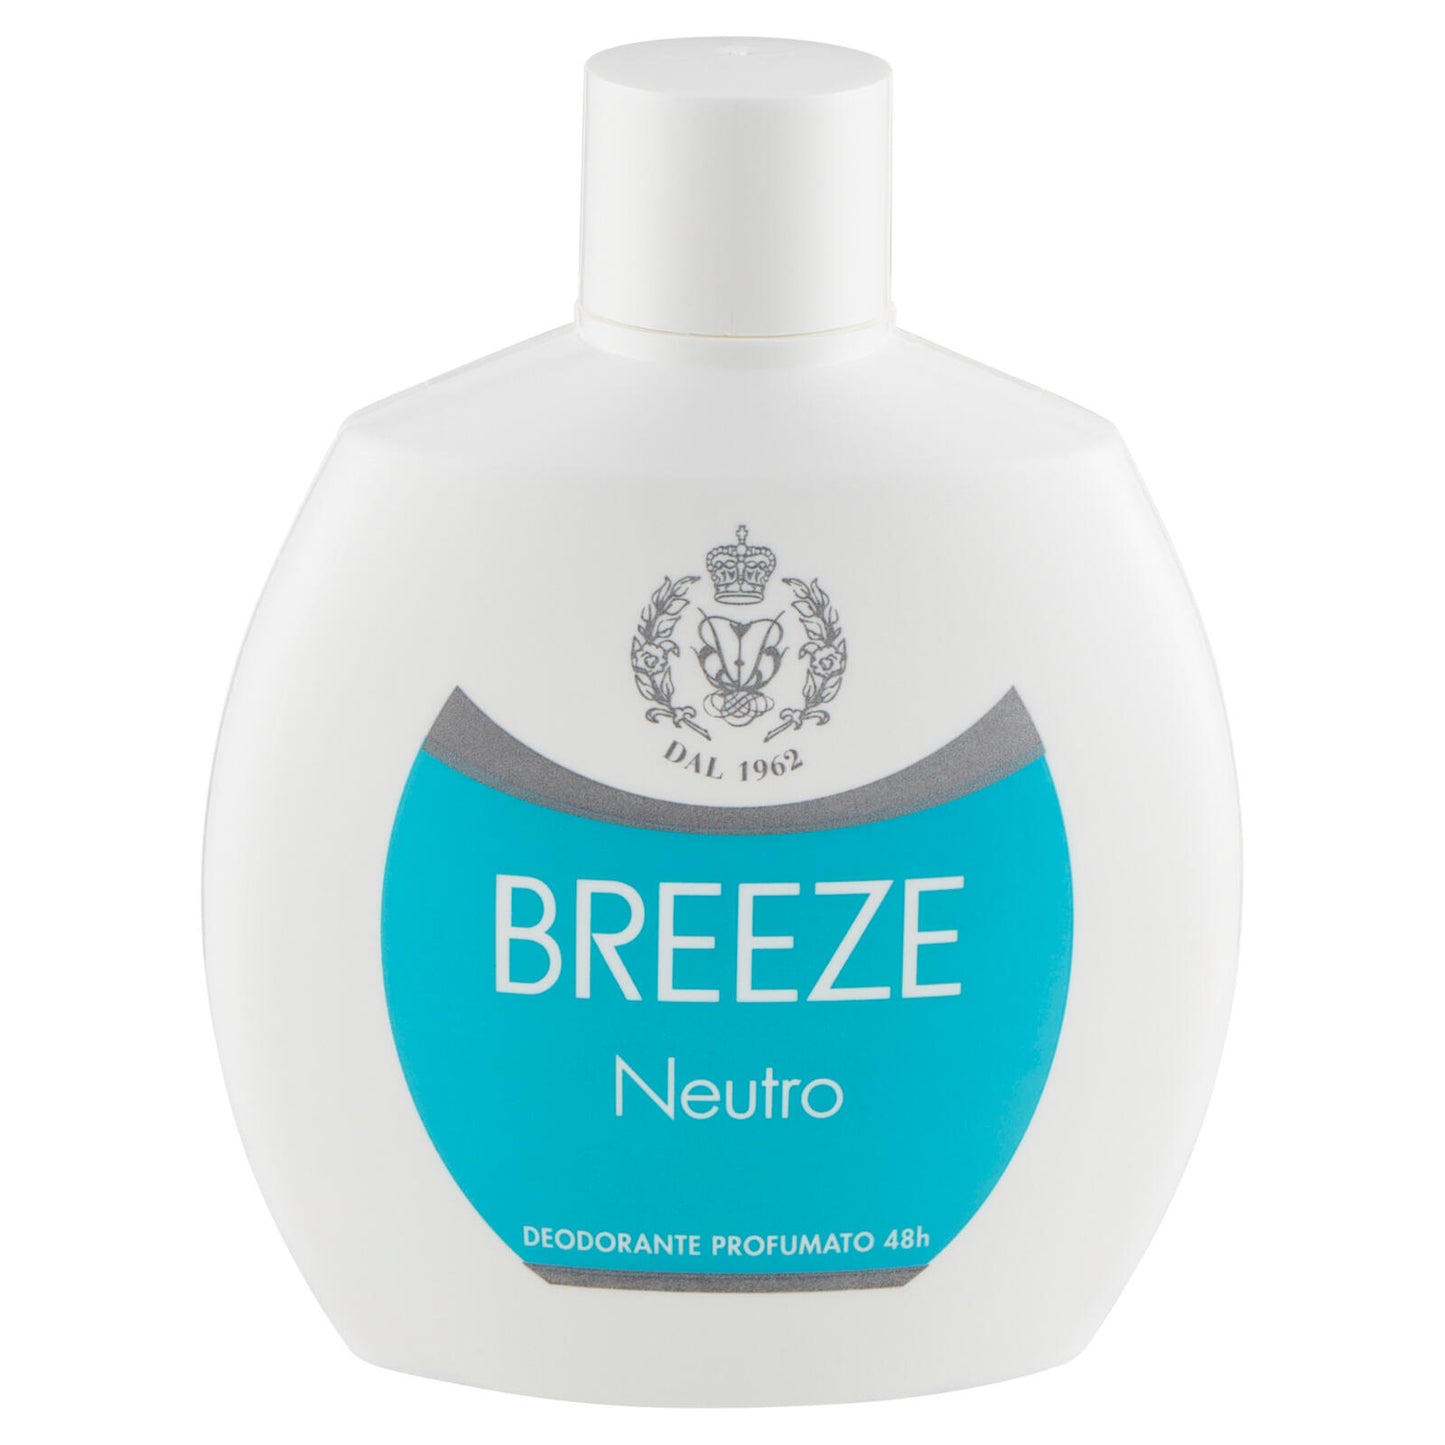 Breeze Neutro Deodorante Profumato 48h 100 mL